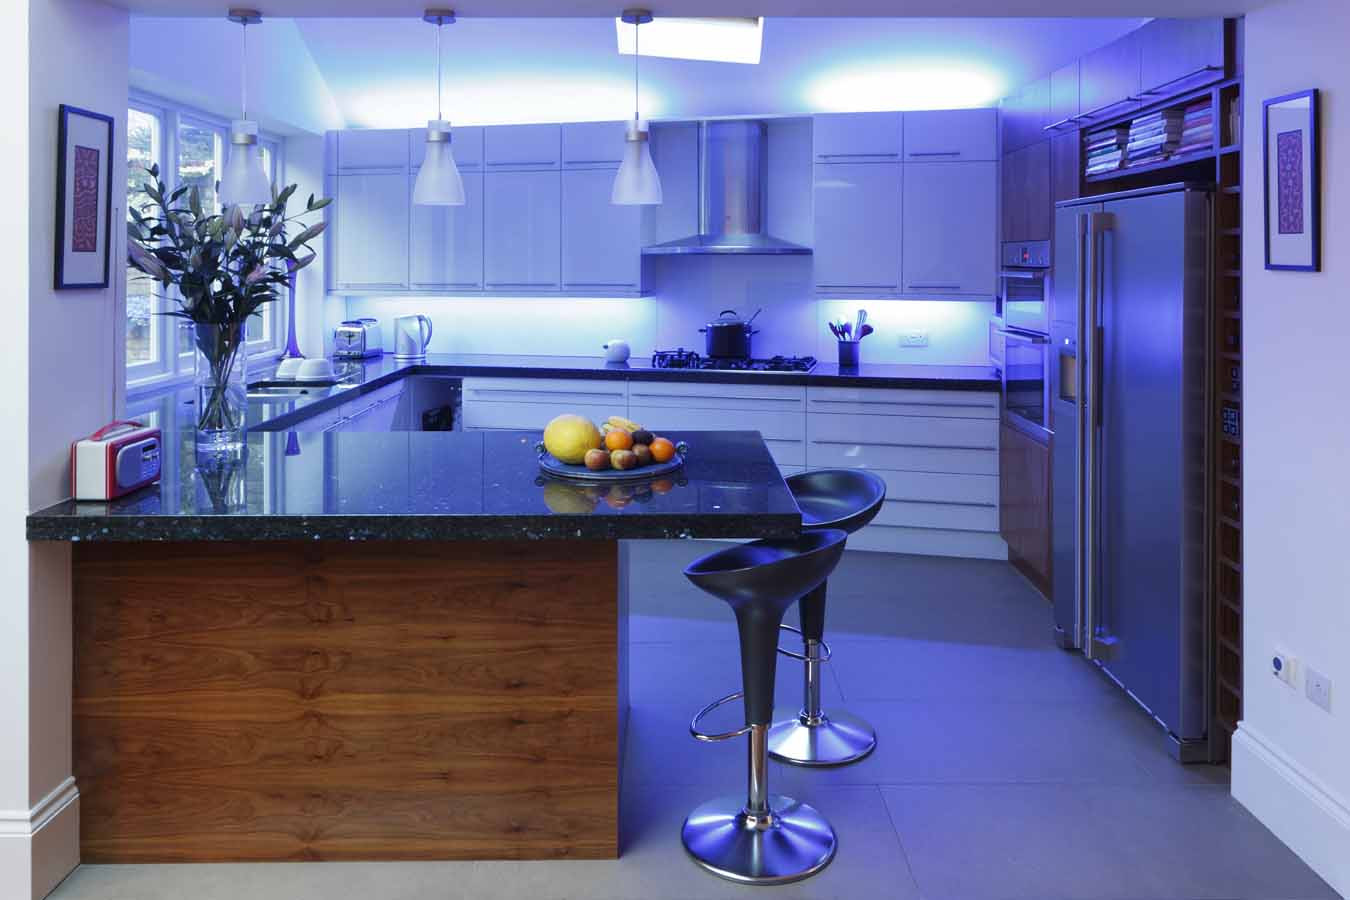 using led light in kitchen